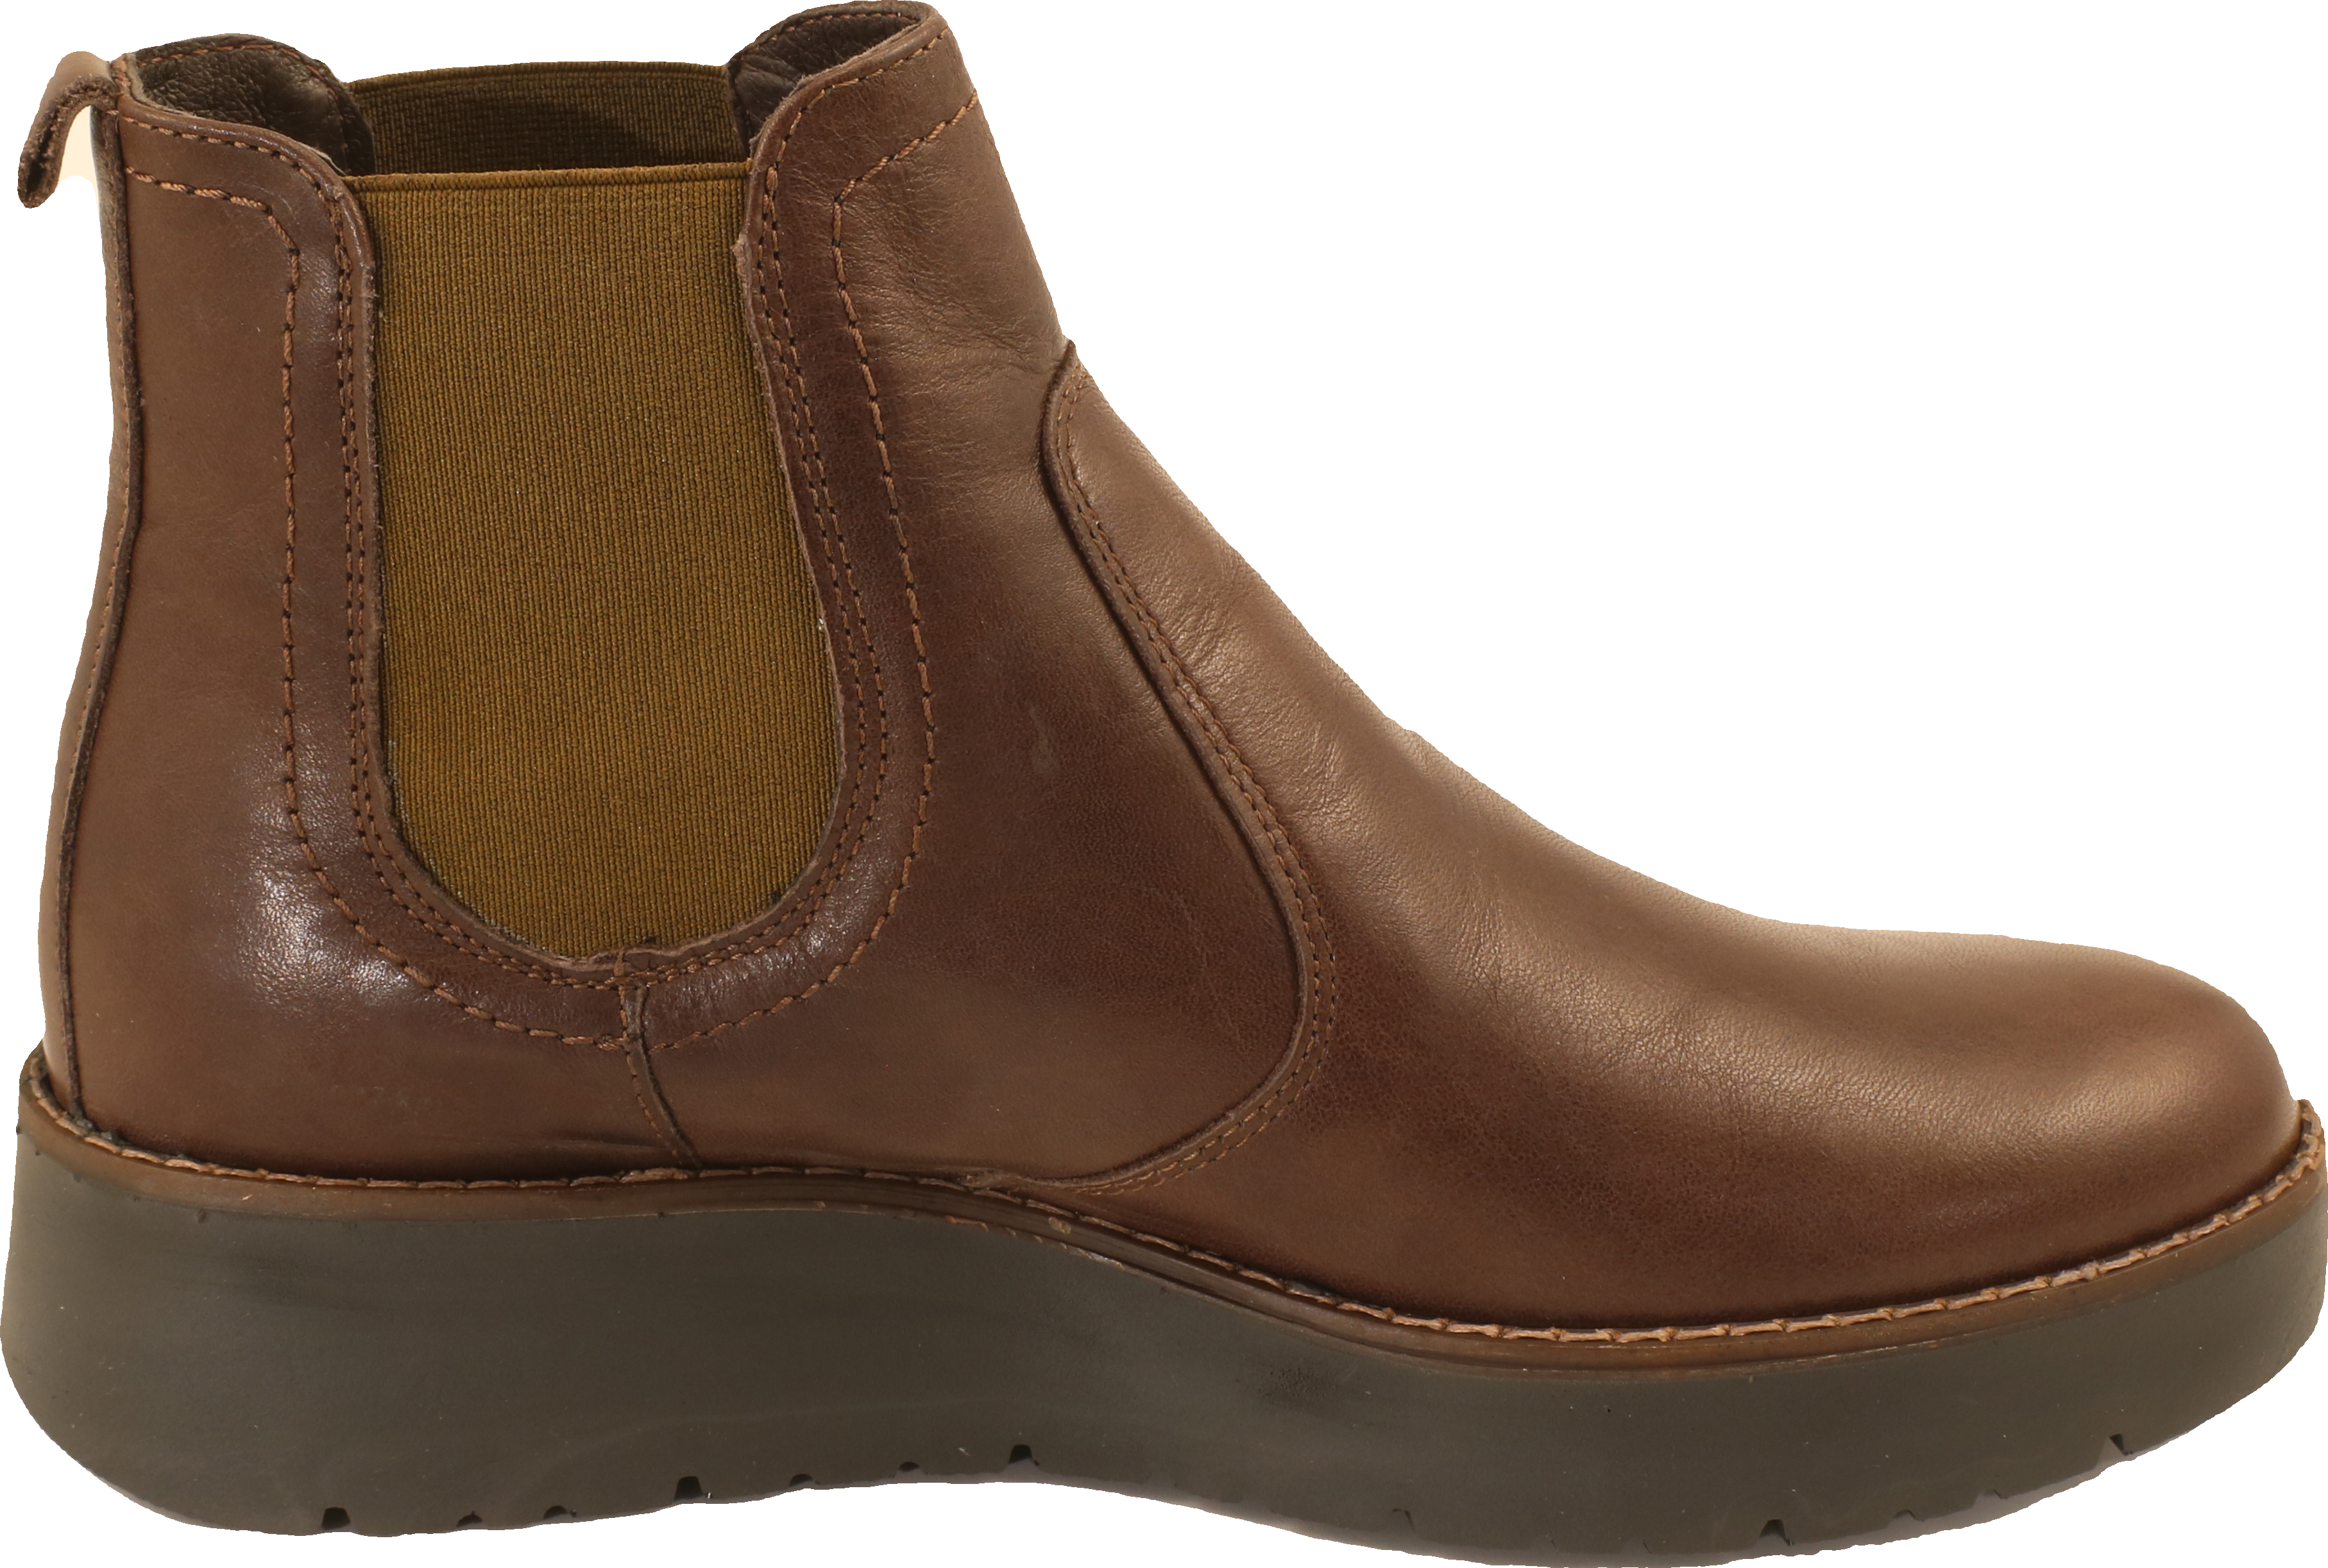 Dbk 81516 - Brown Calf leather